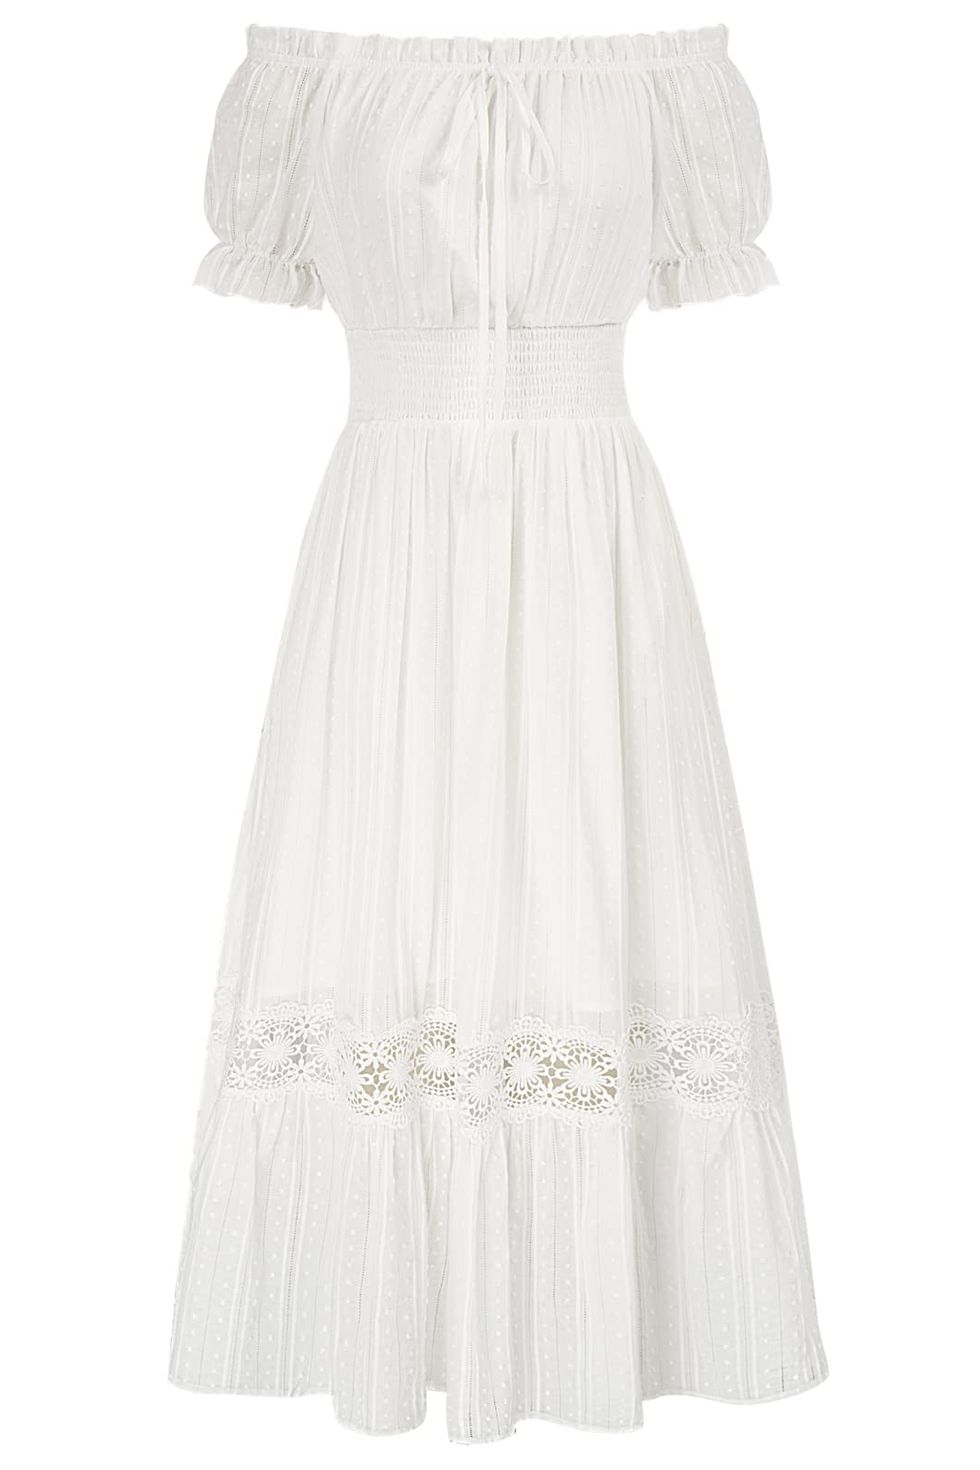 White Cottagecore Maxi Dress, Size Small